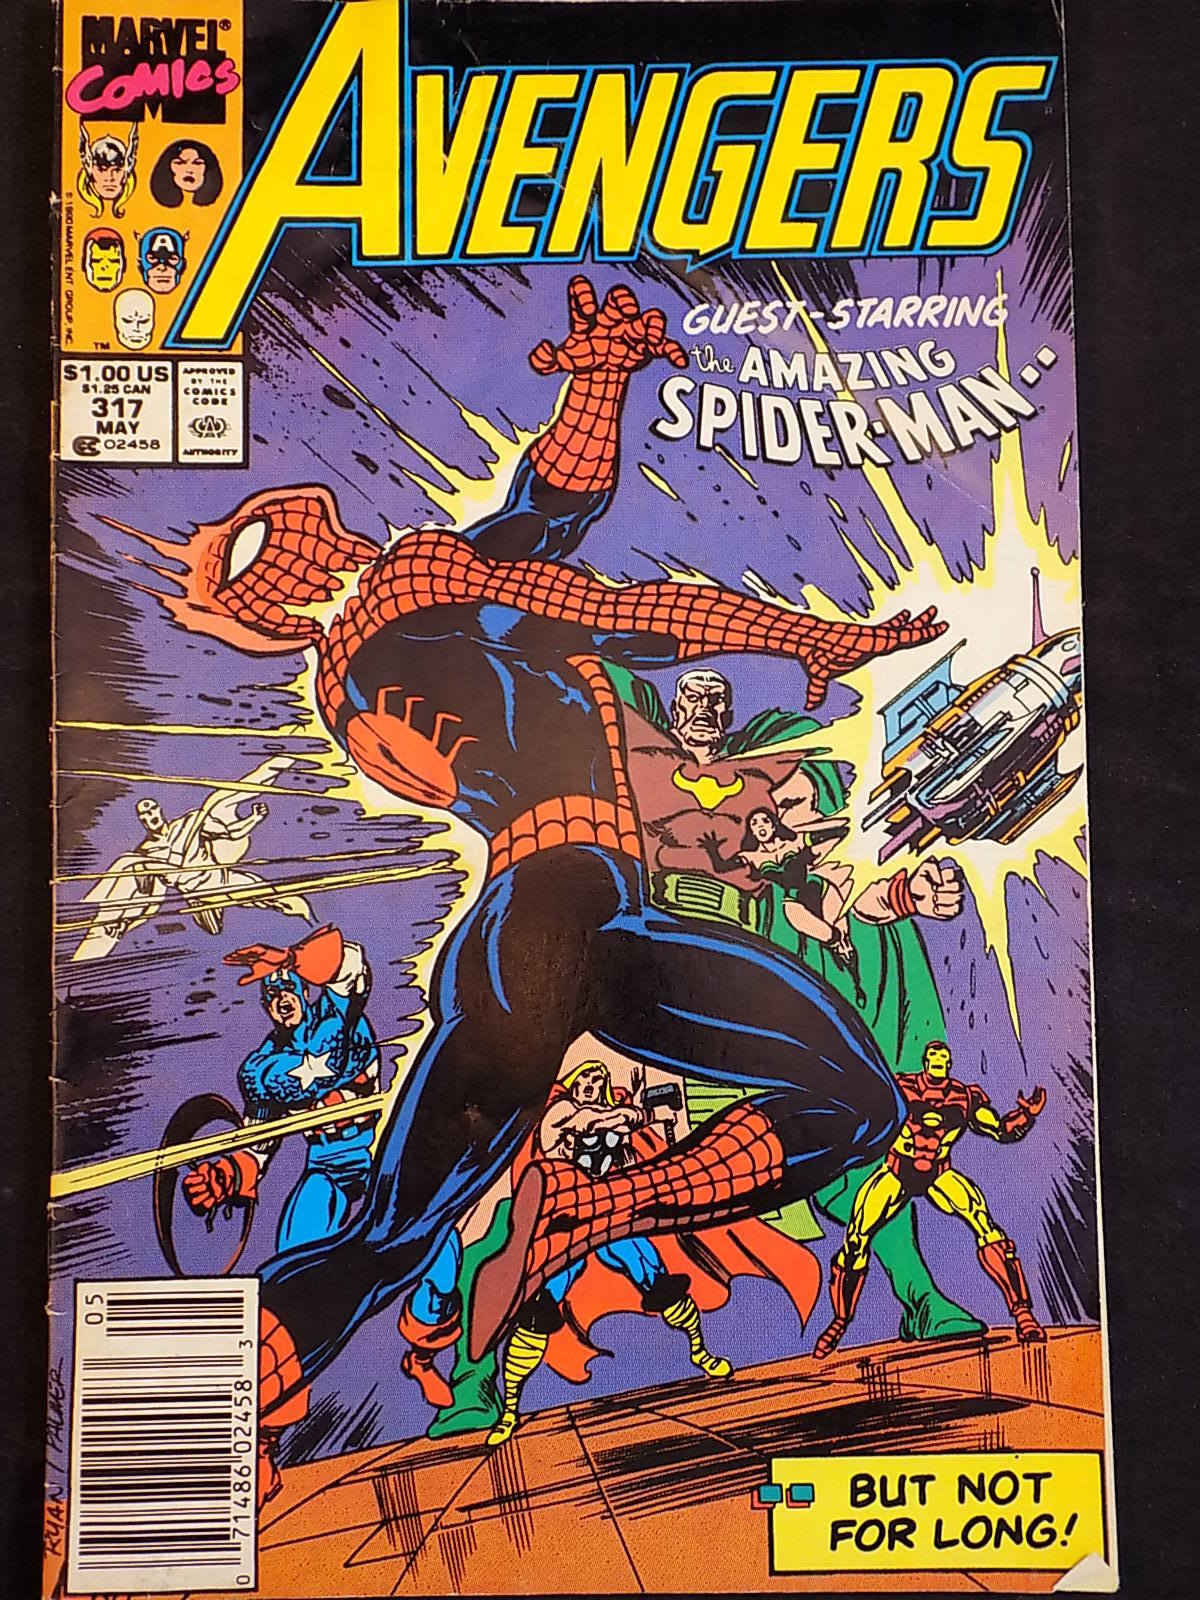 Marvel Comics AVENGERS Vol. 1 #317 Guest Starring The Amazing Spider Man |  eBay